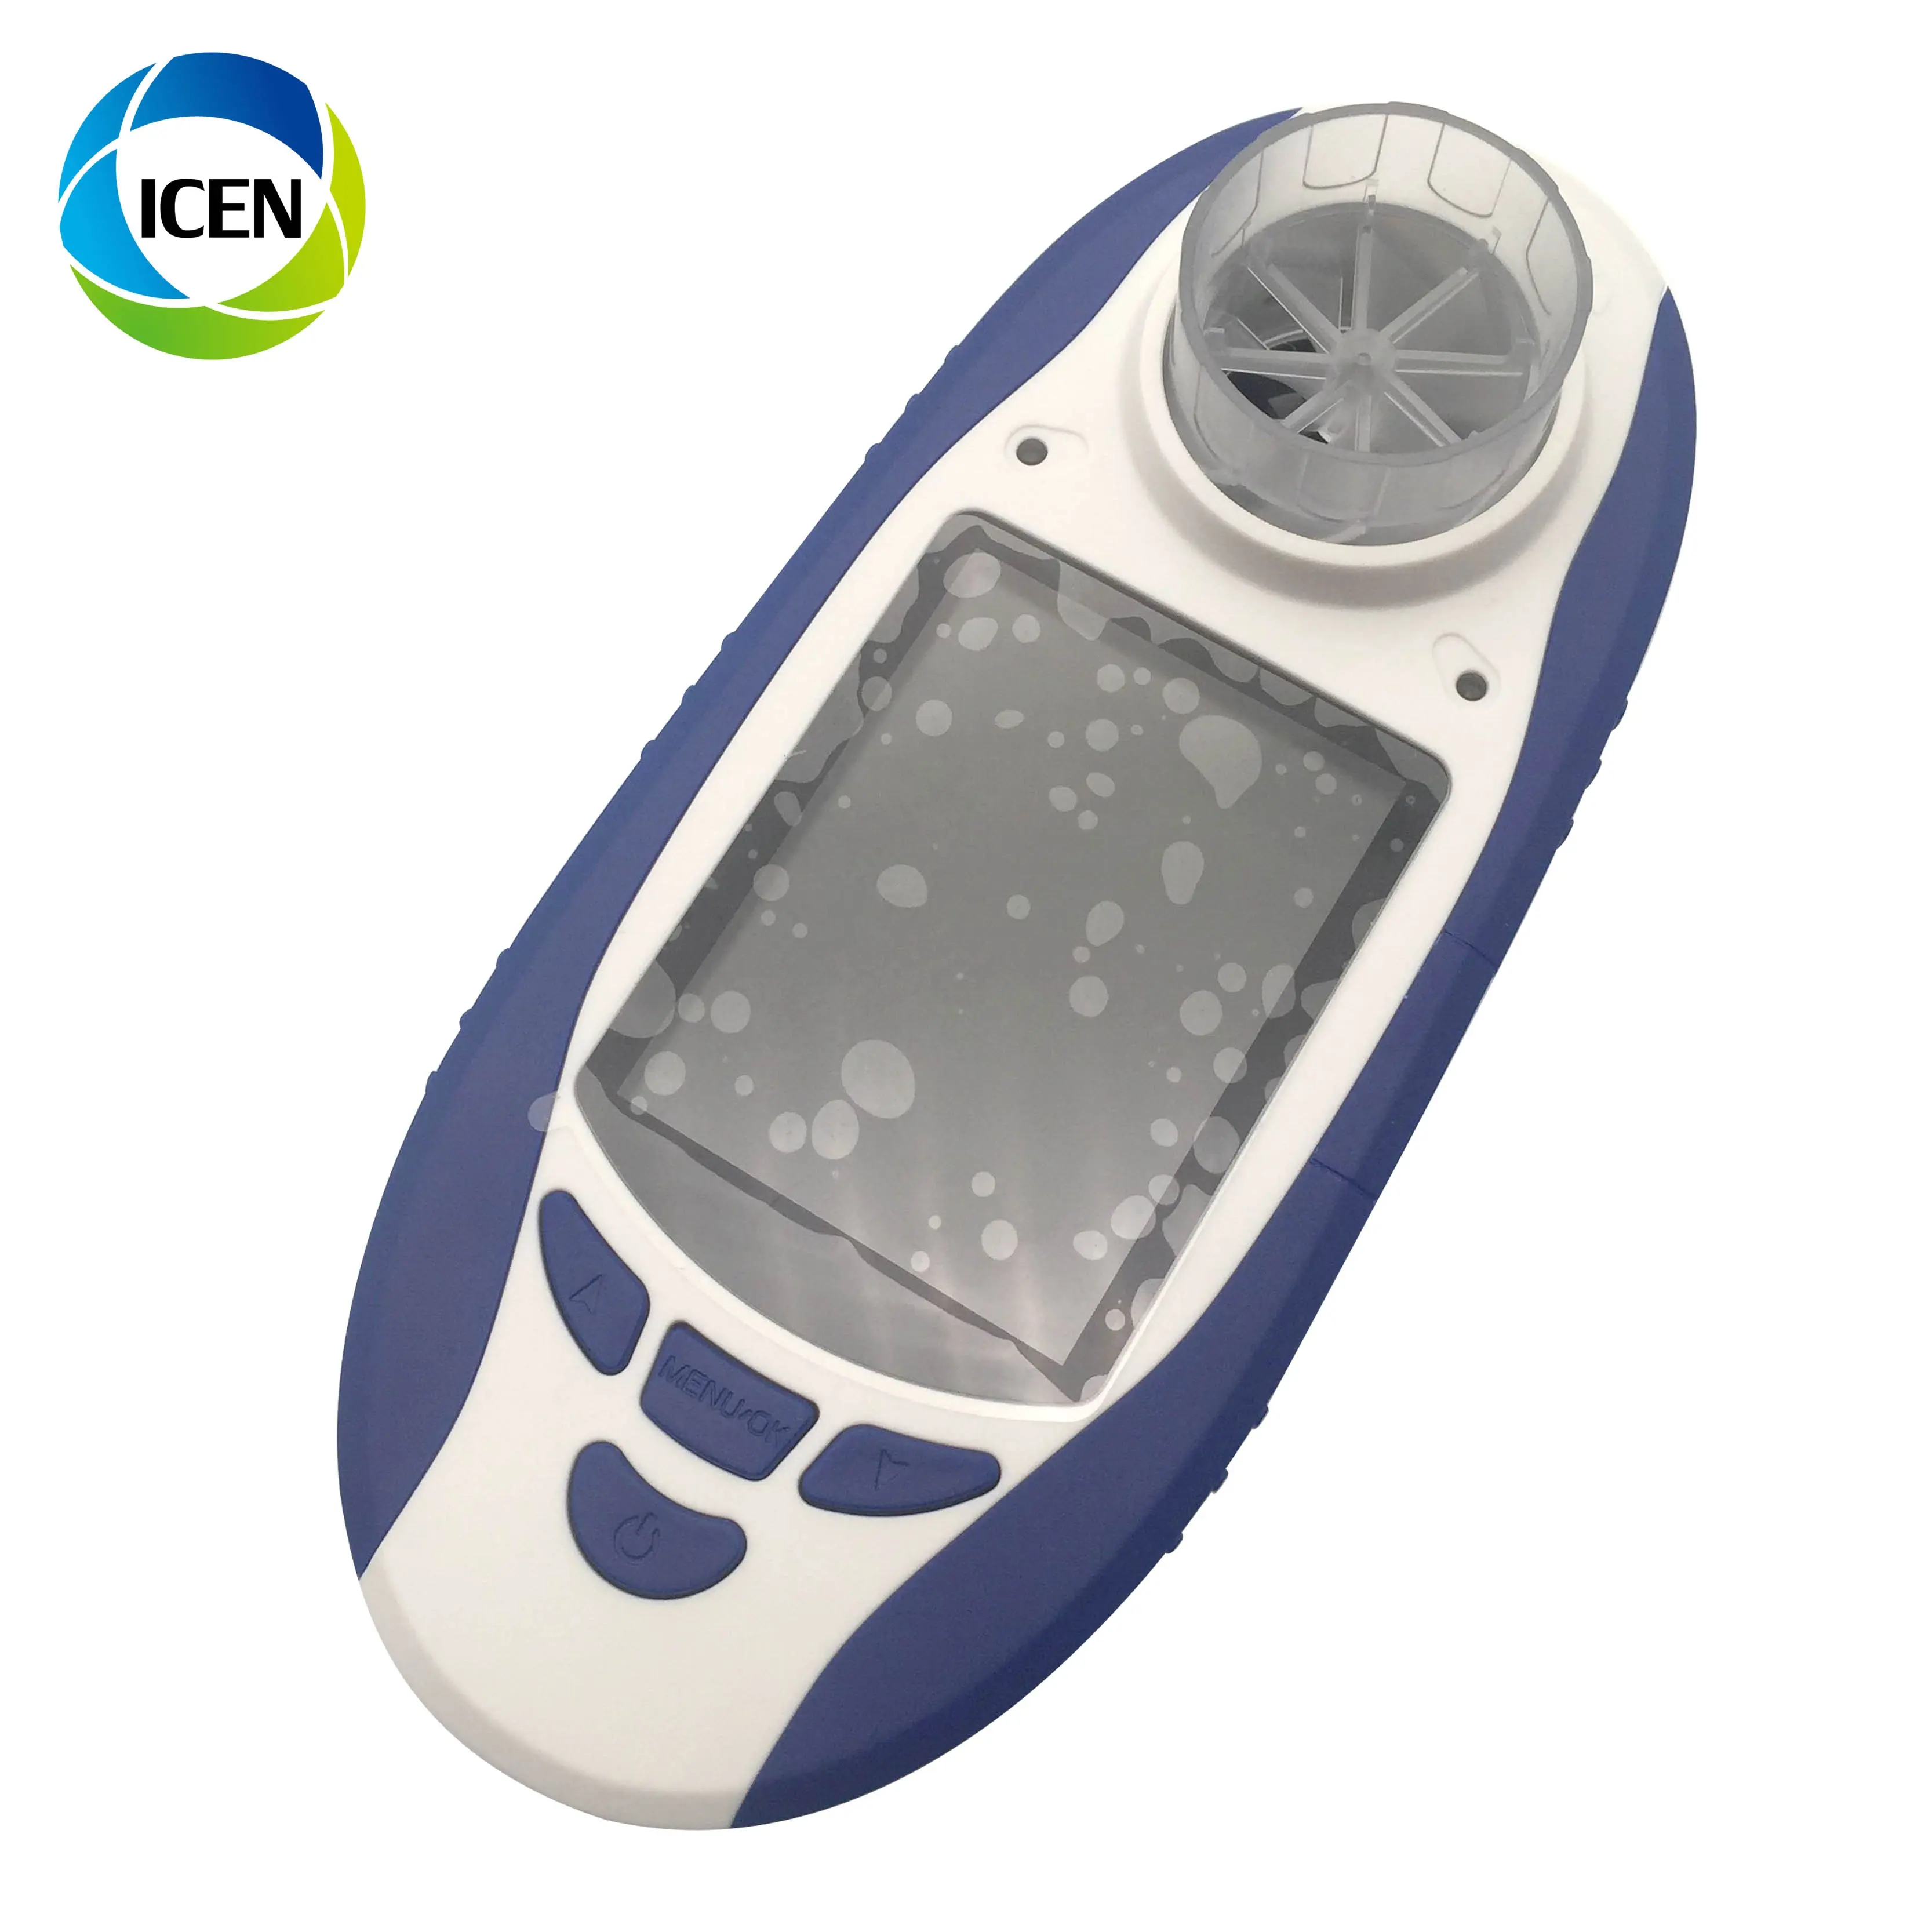 IN-CSP10BT Medical Portable Handheld Bluetooth Spirometer